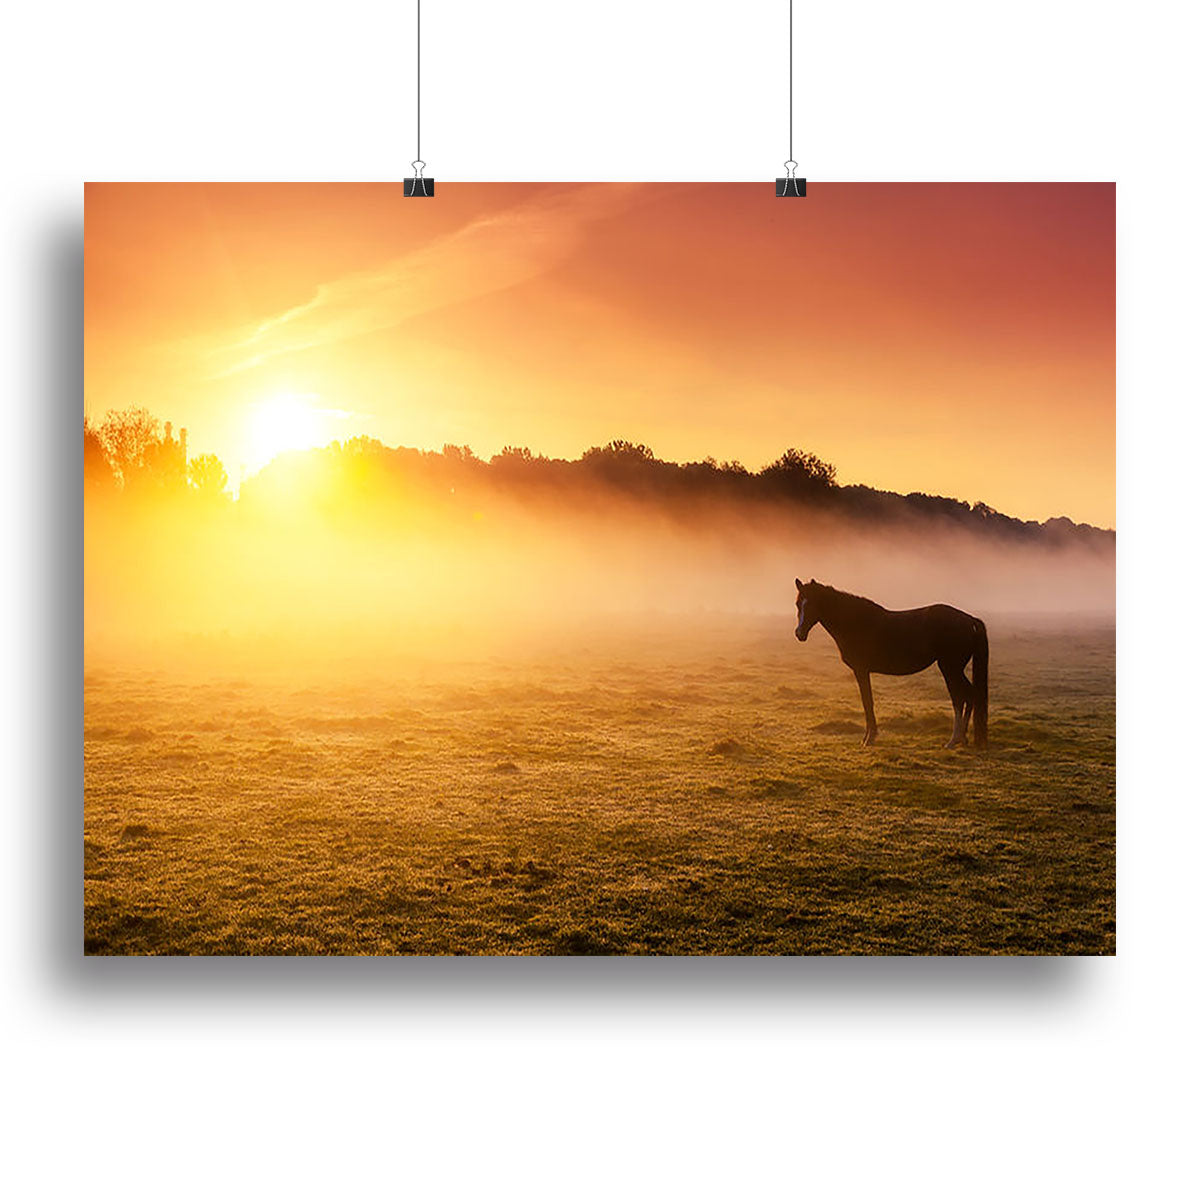 Arabian horses grazing on pasture at sundown in orange sunny beams. Dramatic foggy scene Canvas Print or Poster - Canvas Art Rocks - 2